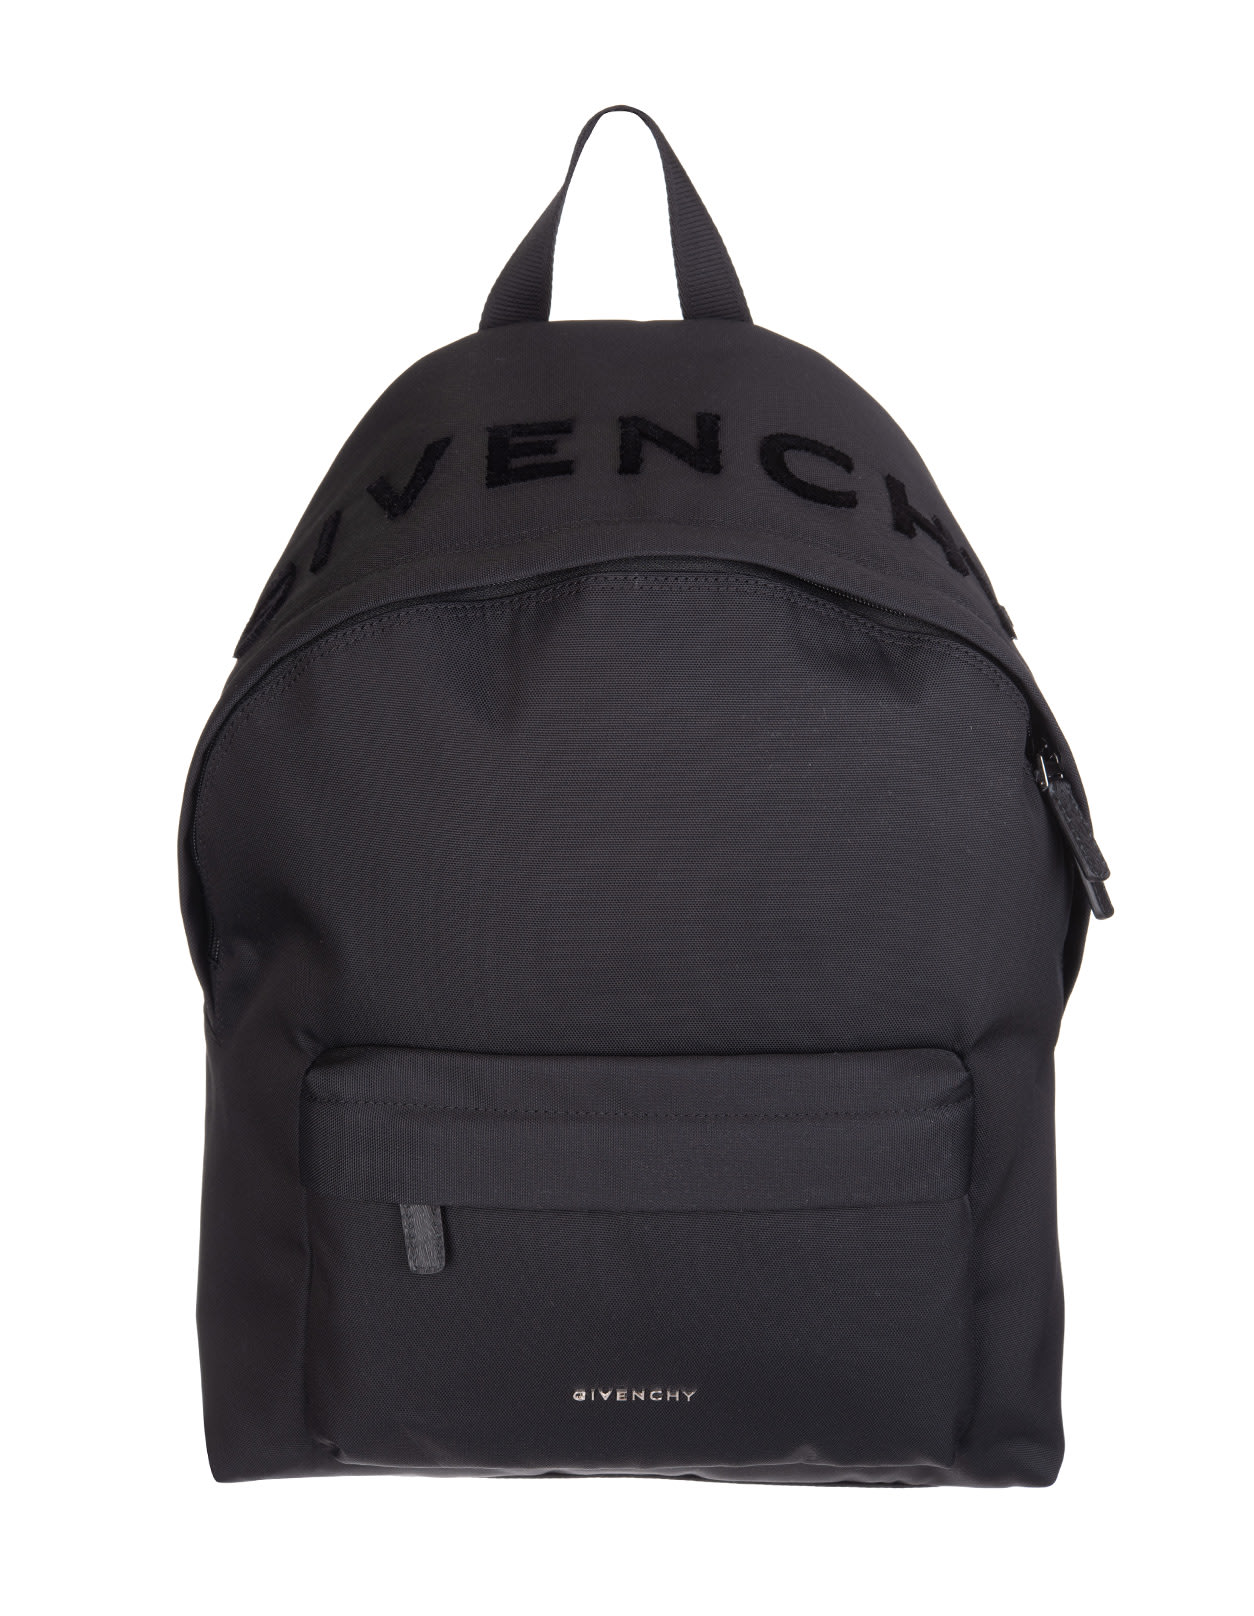 Givenchy Man Black Nylon Backpack With Flocked Logo